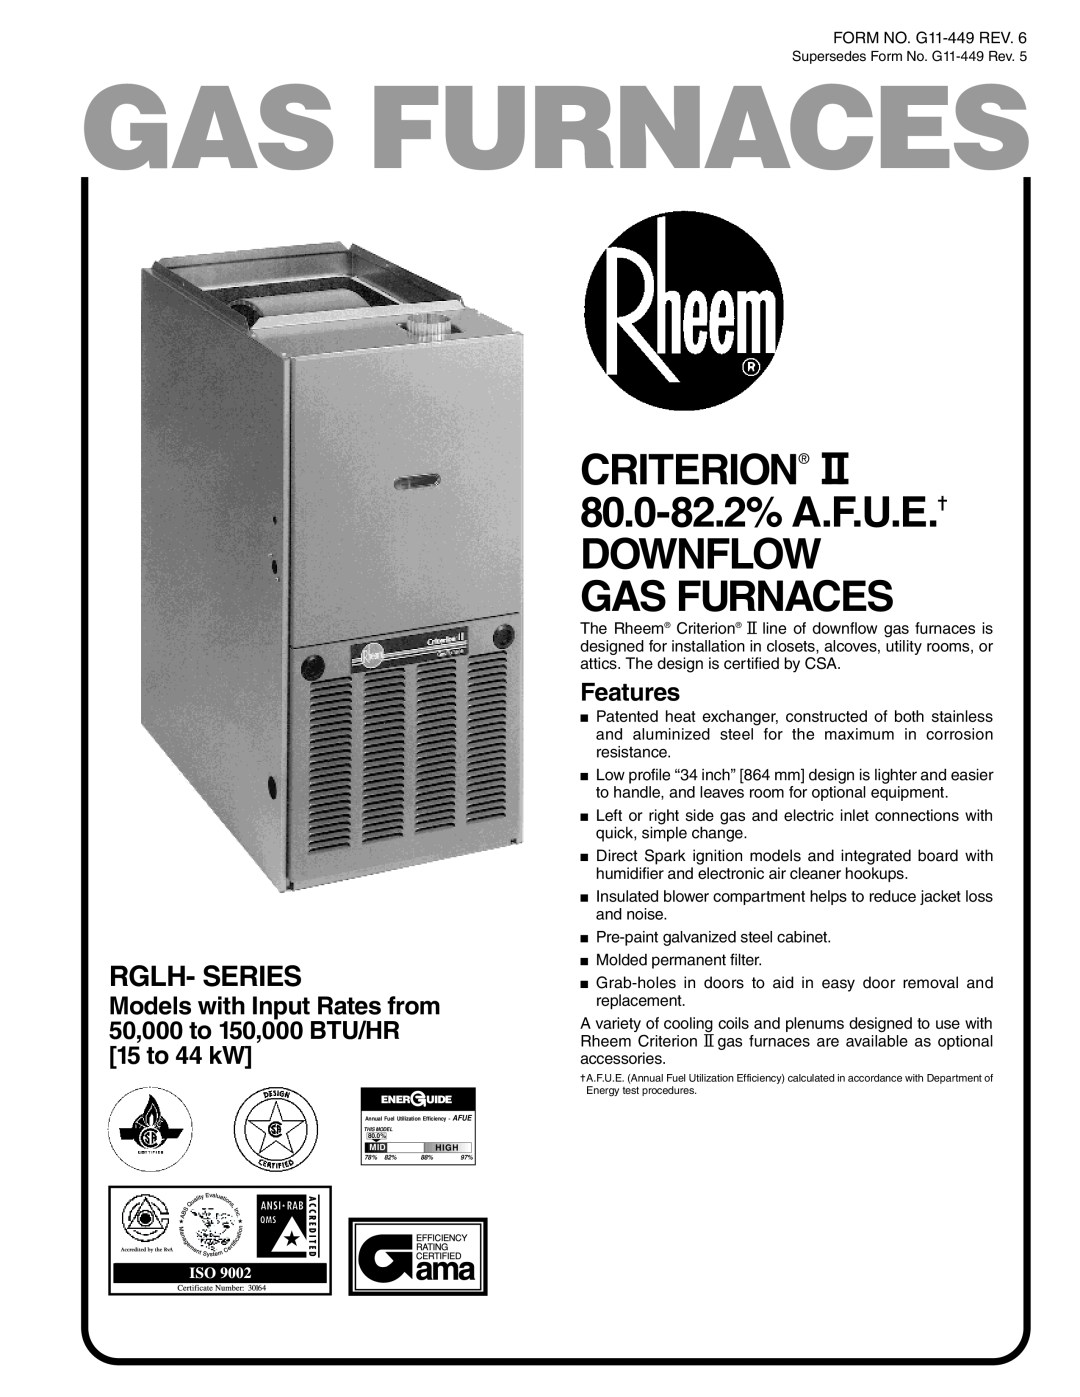 Rheem 05EAUER, 07EAUER, 05NAUER manual CRITERION 80.0-82.2%A.F.U.E, Downflow Gas Furnaces, Rglh- Series, Features 